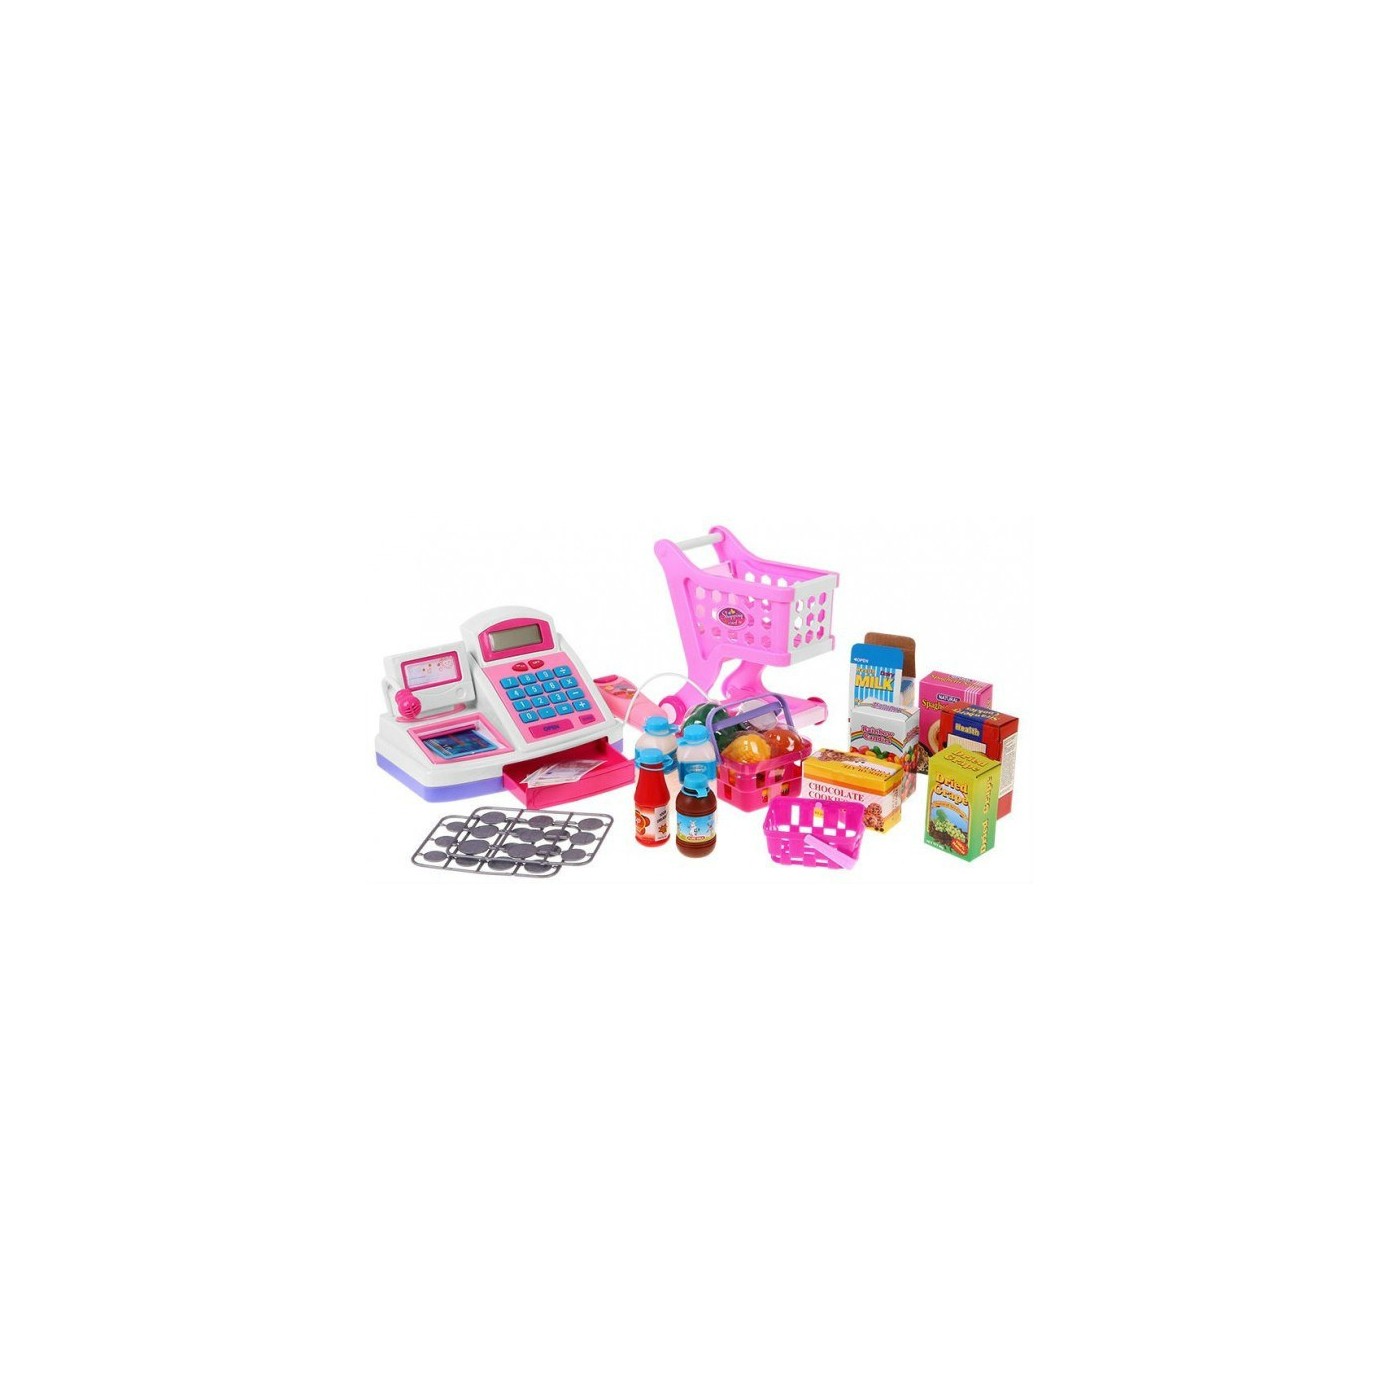 Cash Register Shopping Cart Pink Accessories